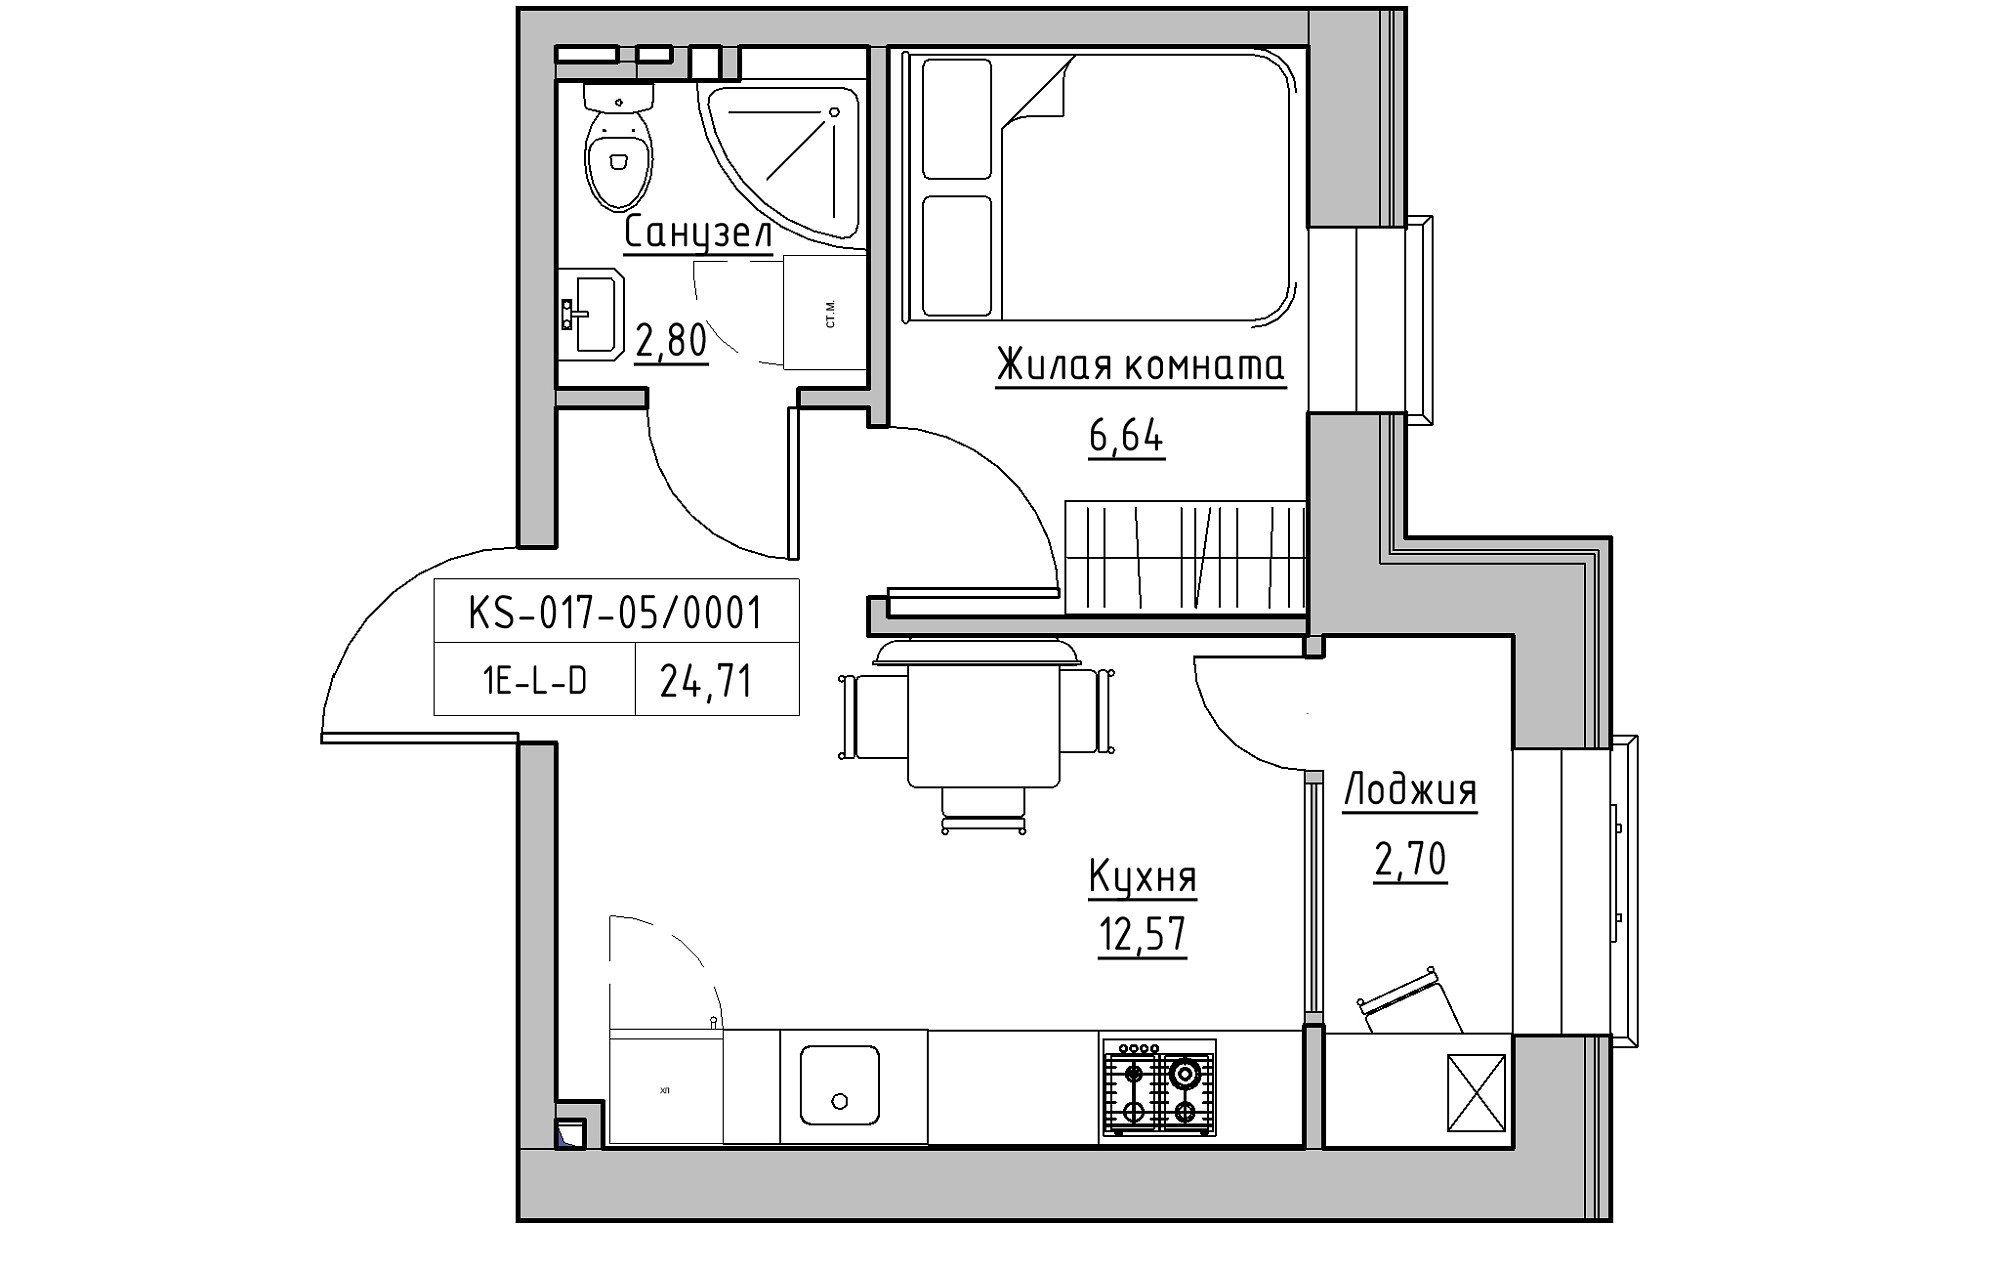 Planning 1-rm flats area 24.71m2, KS-017-05/0001.